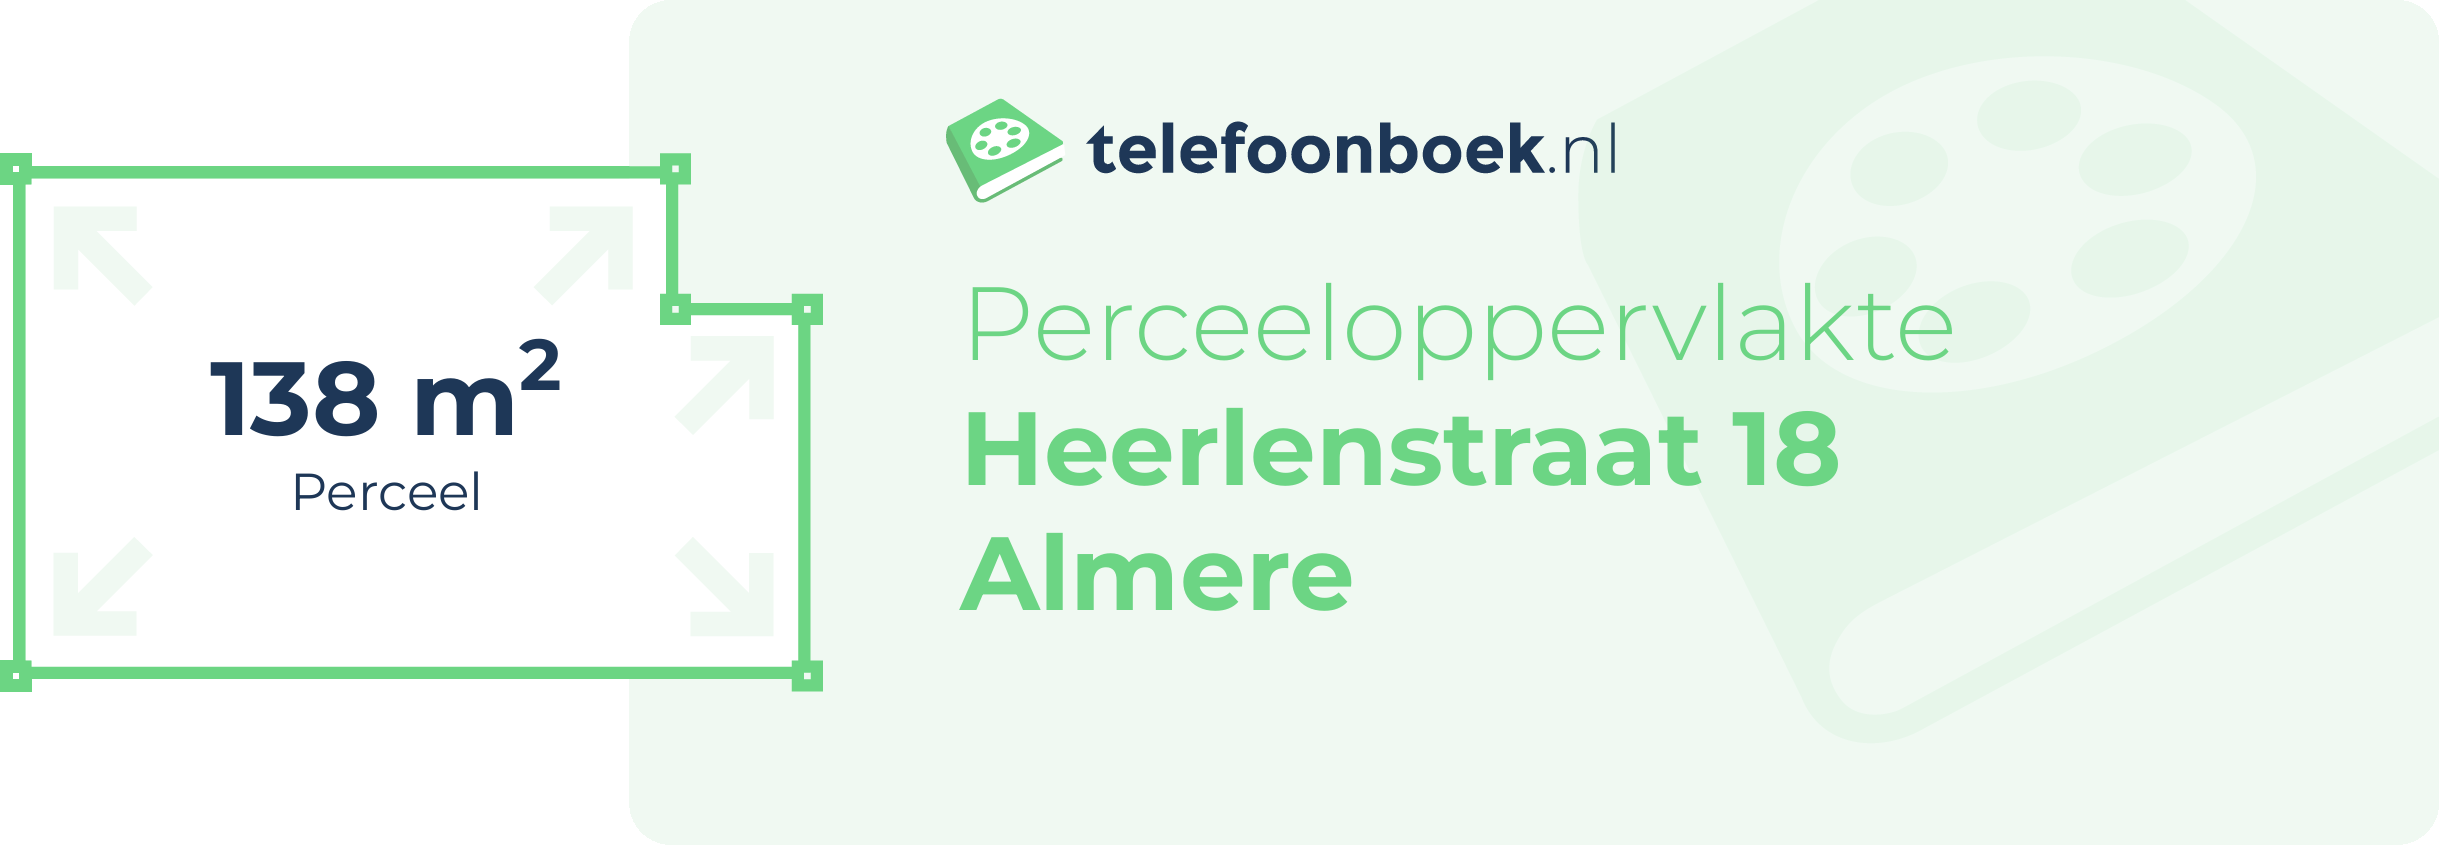 Perceeloppervlakte Heerlenstraat 18 Almere